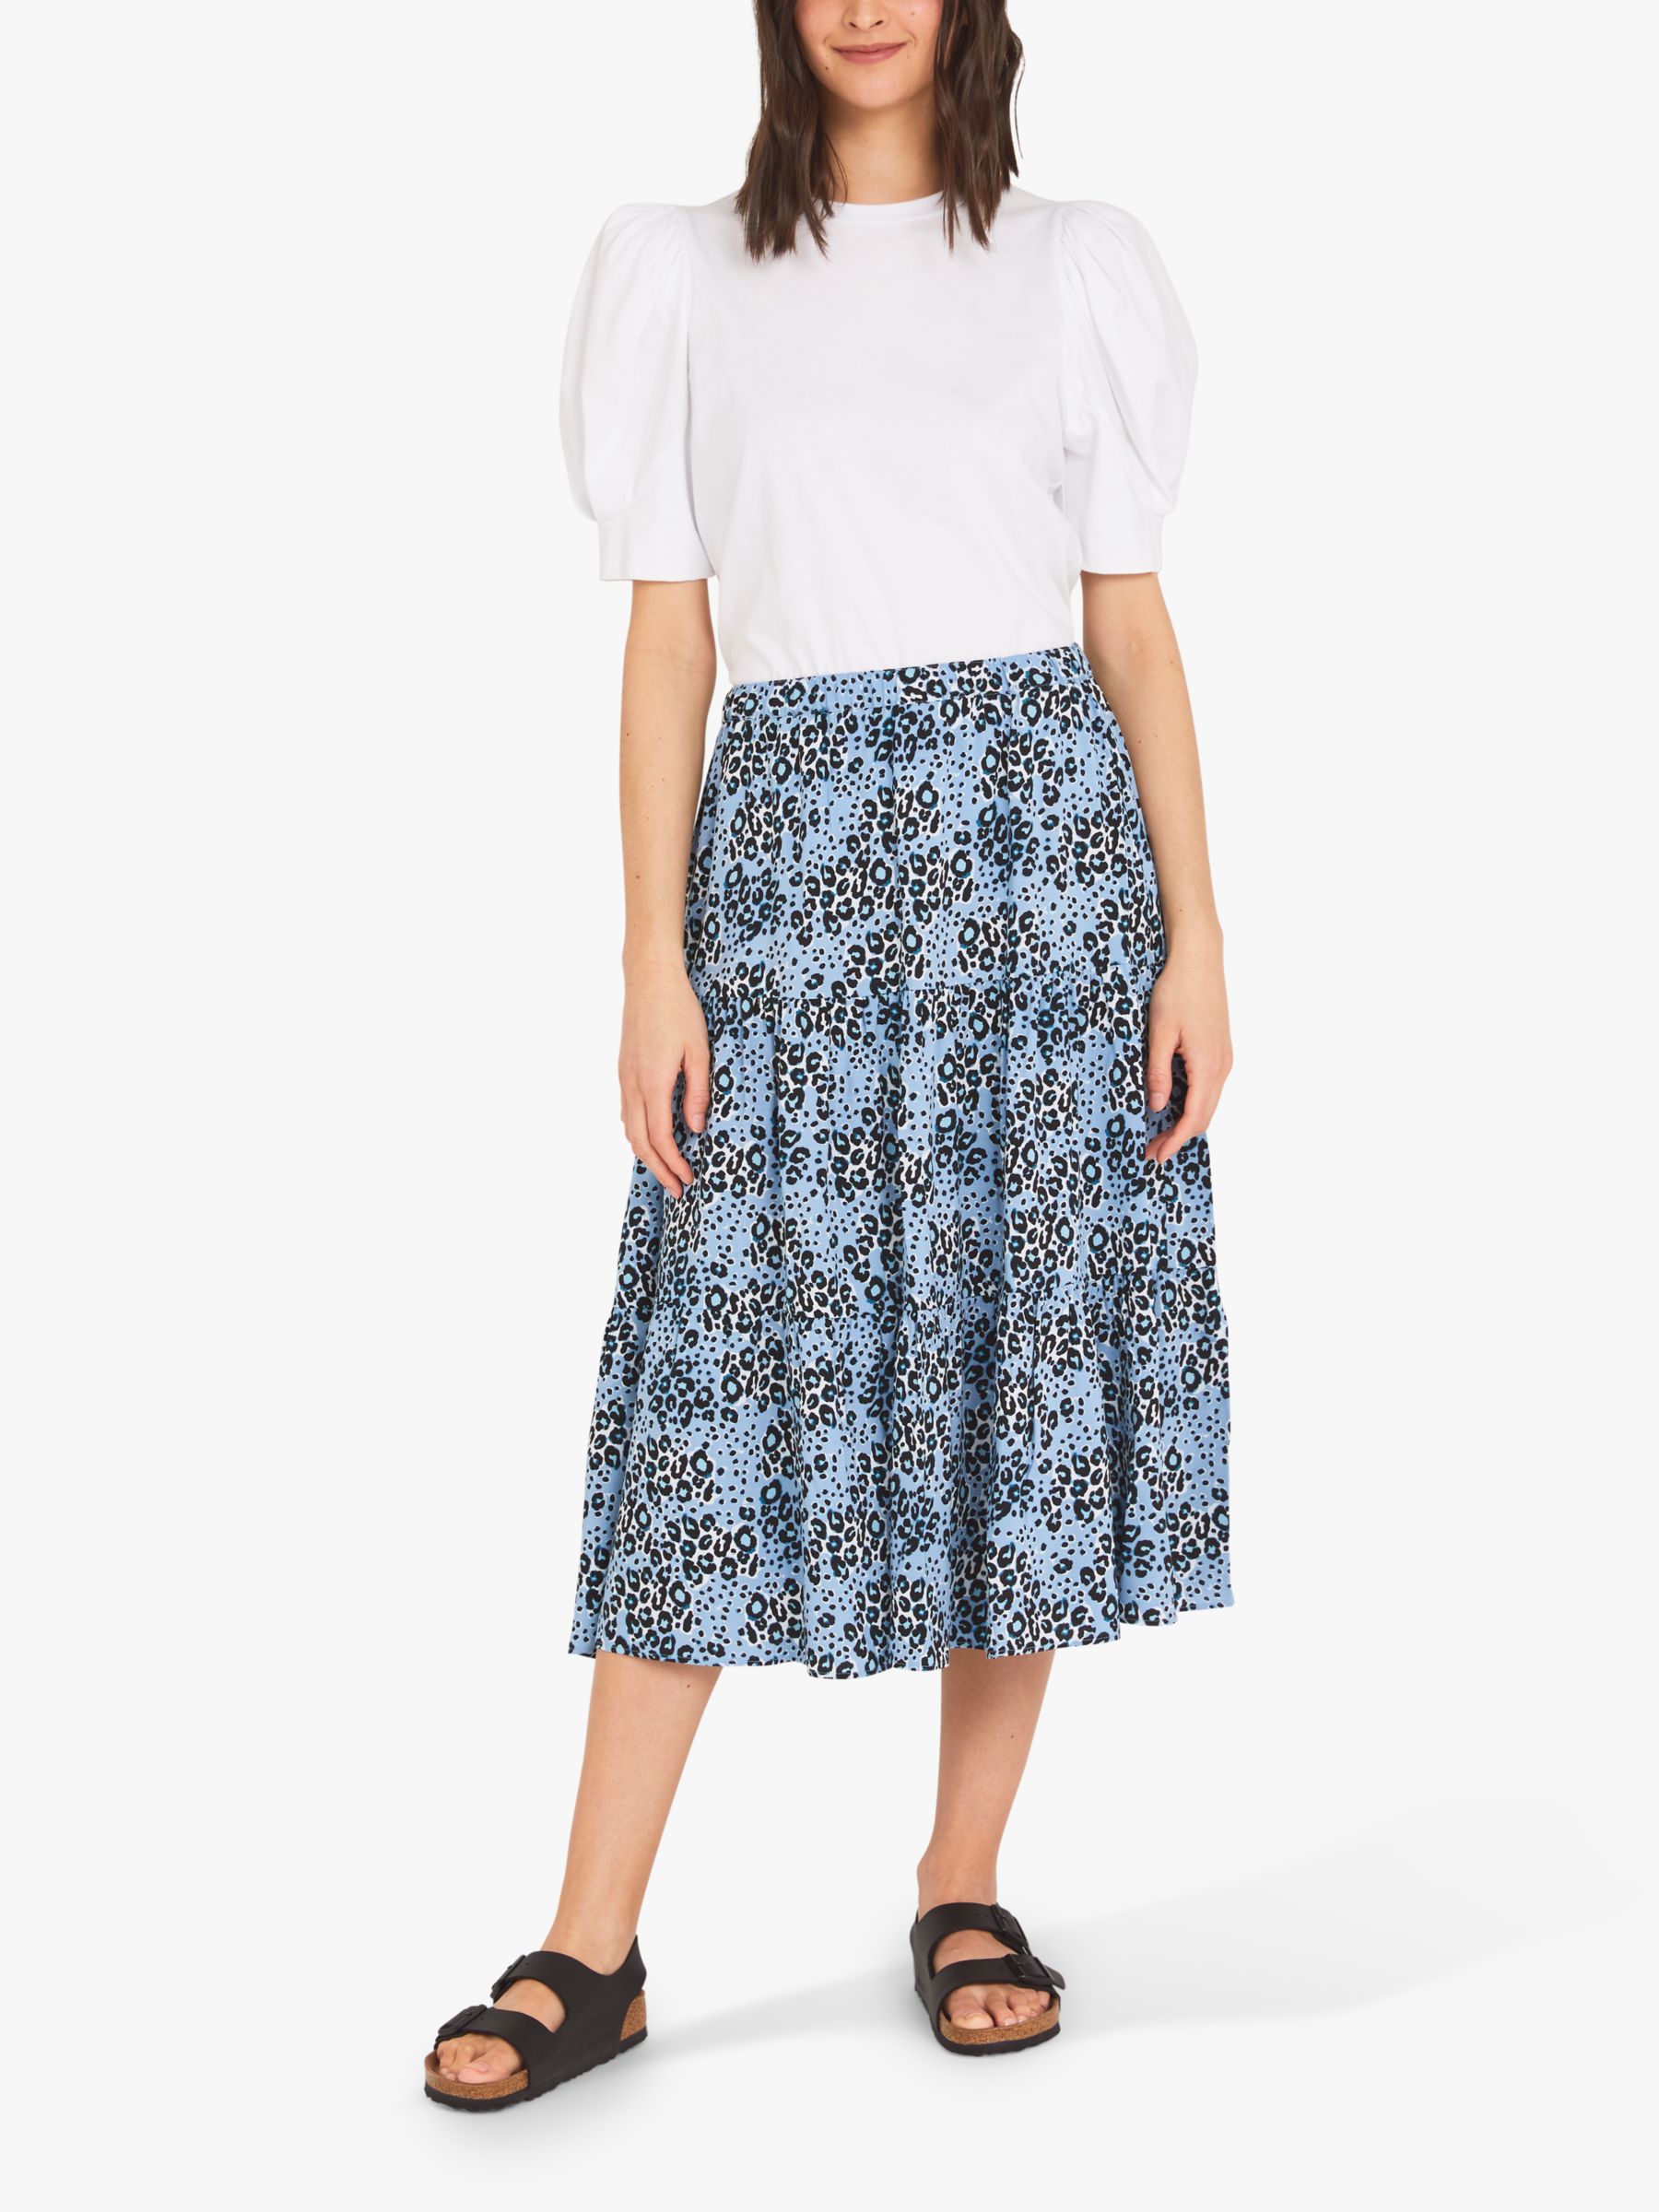 Finery Simone Leopard Print Tiered Skirt, Blue/Black